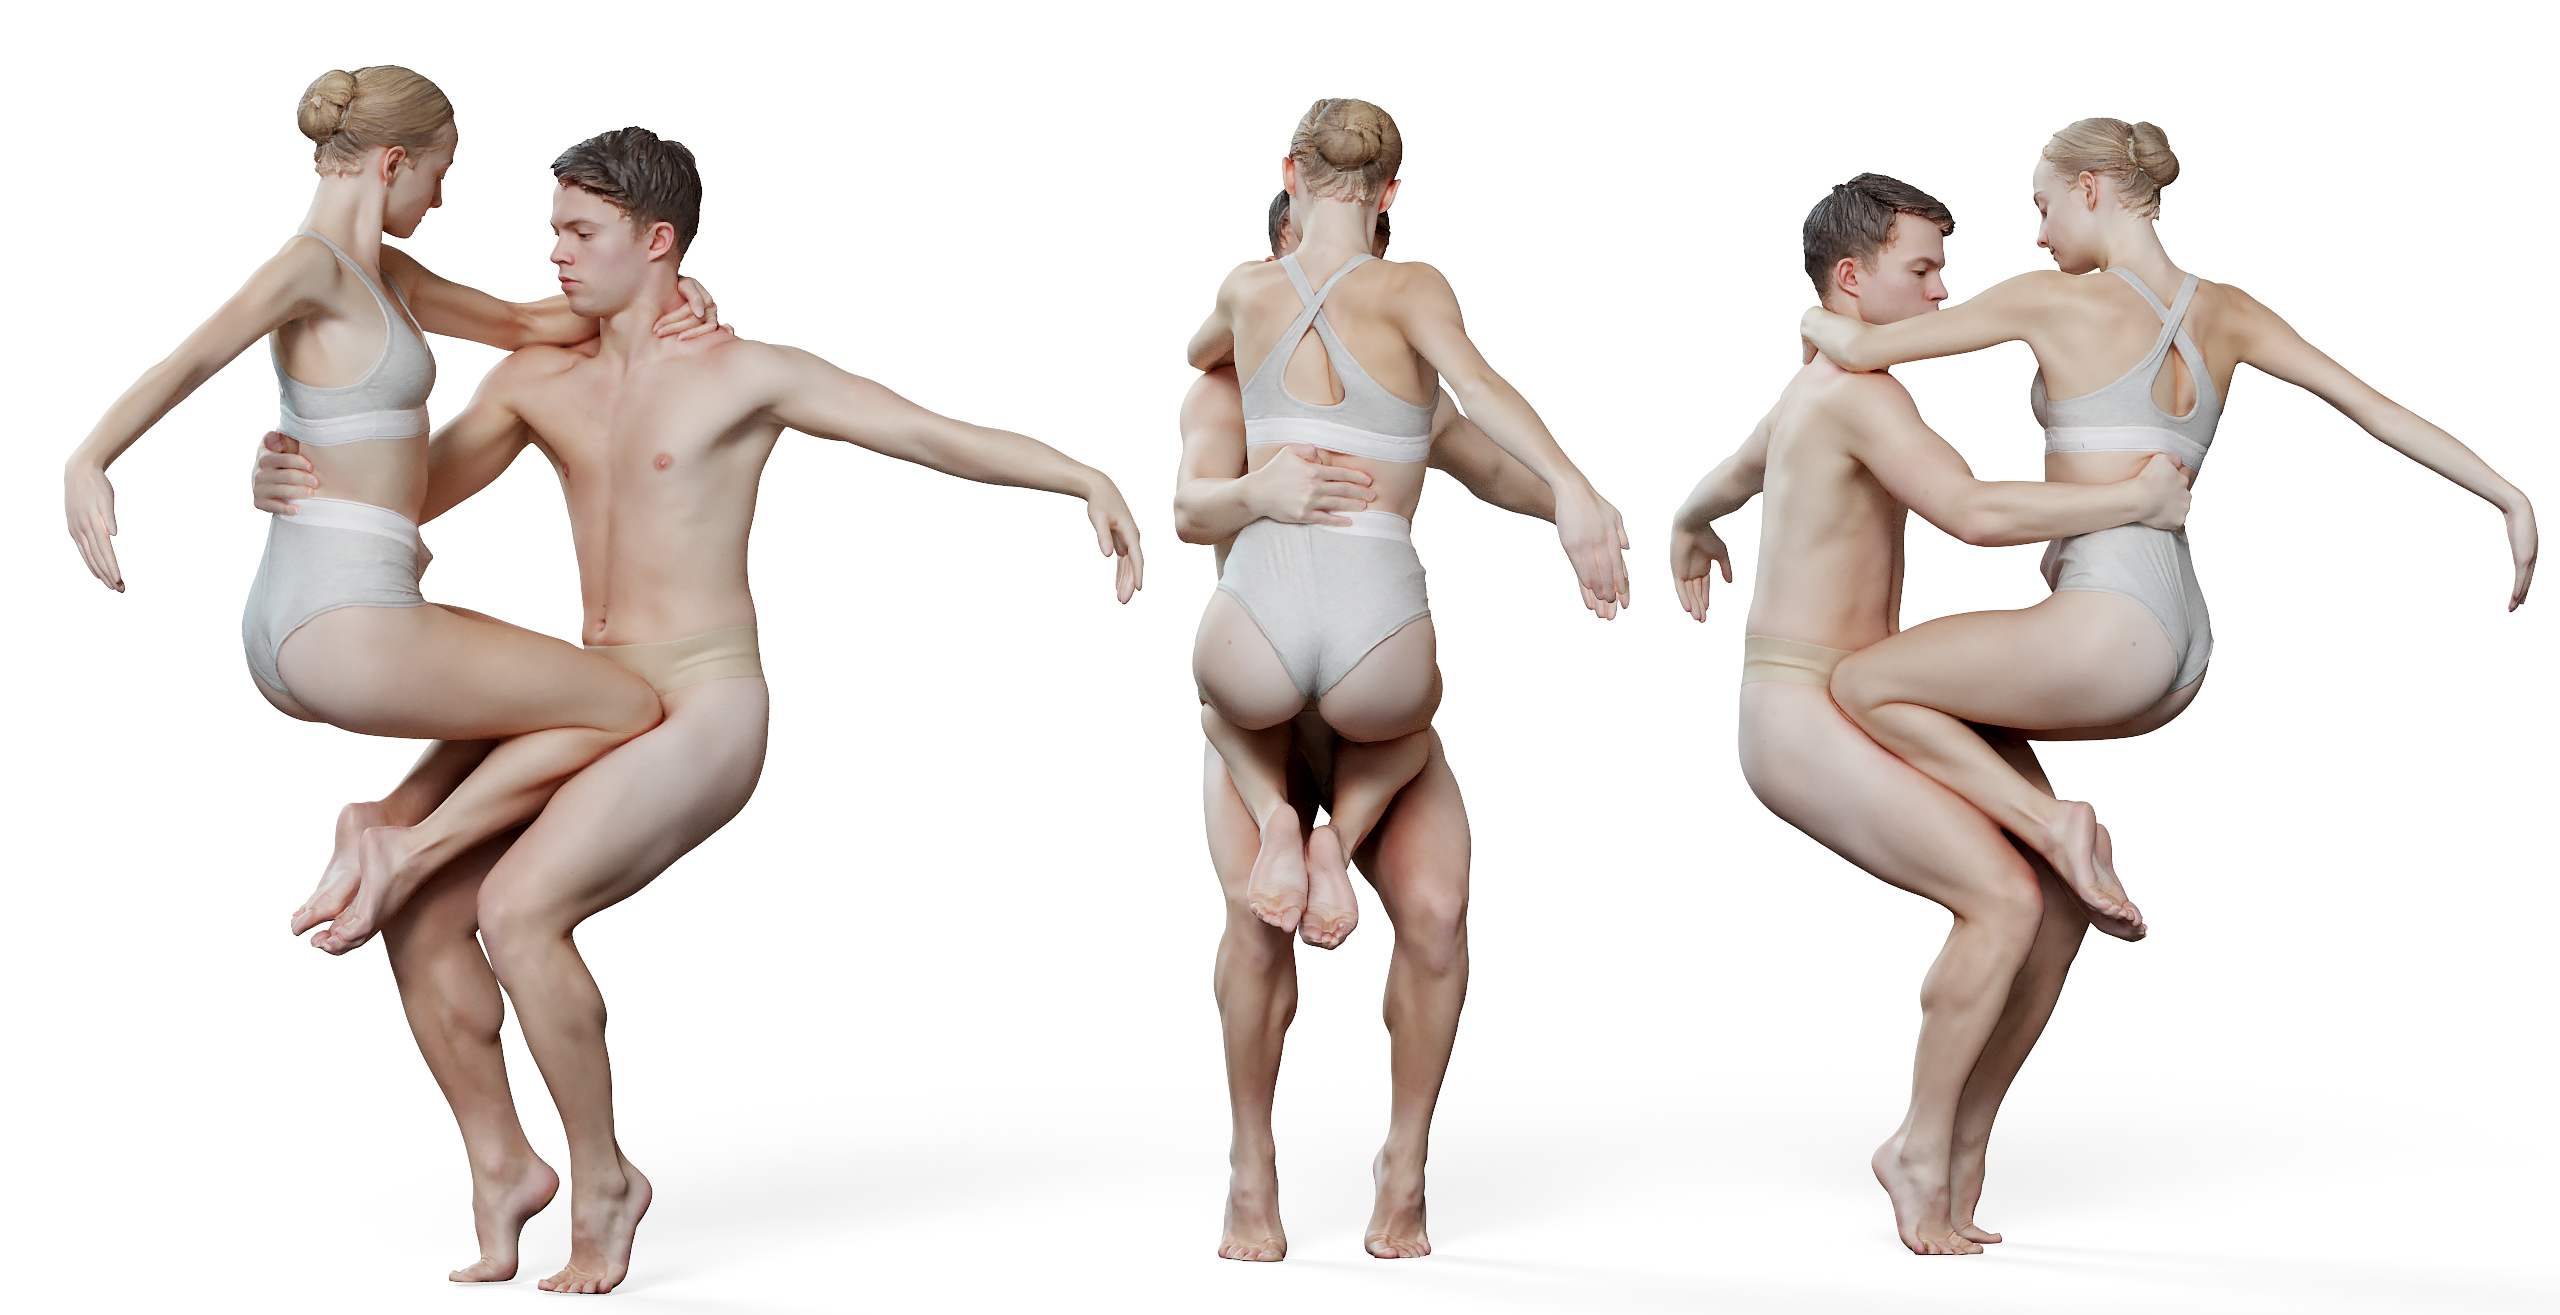 3D Ballet Duet post render zbrush